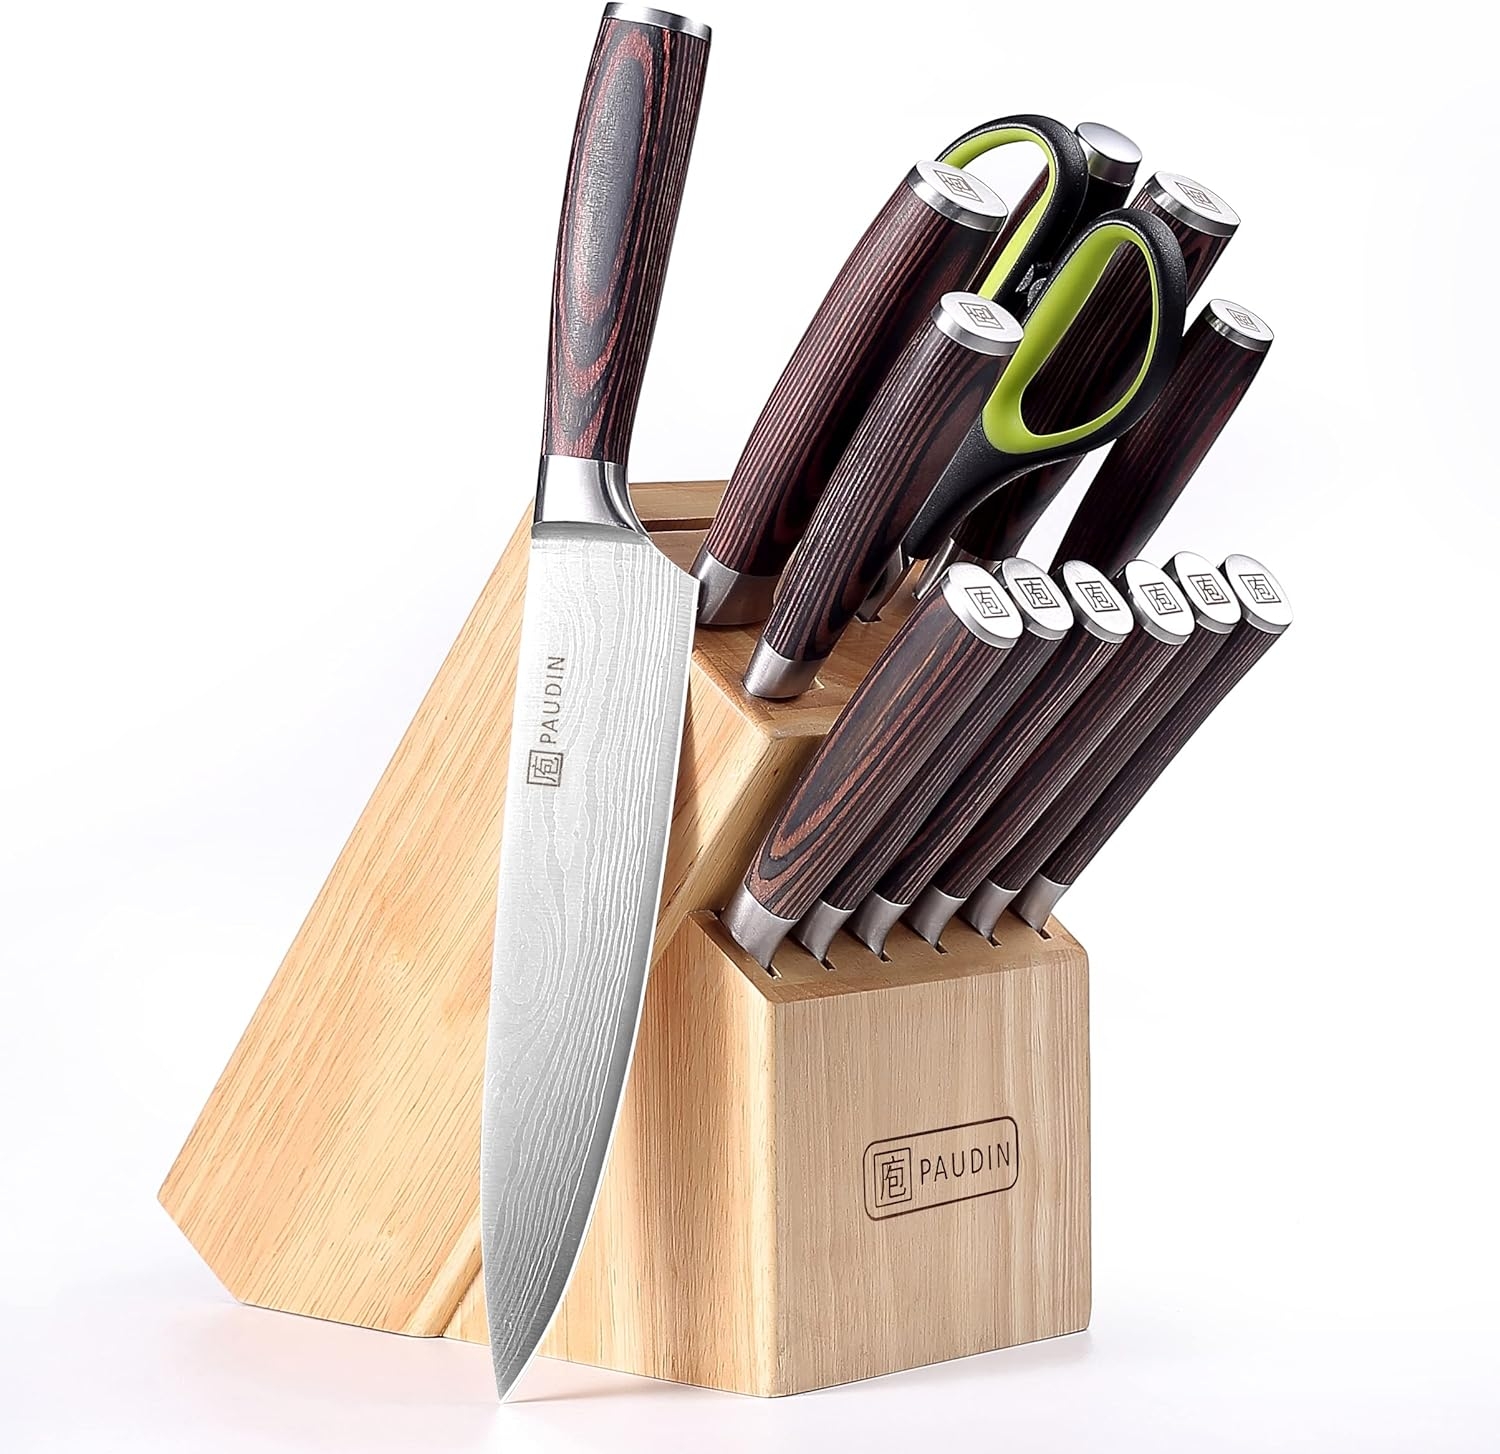  PAUDIN Kitchen Knife Set, 3 Piece High Carbon